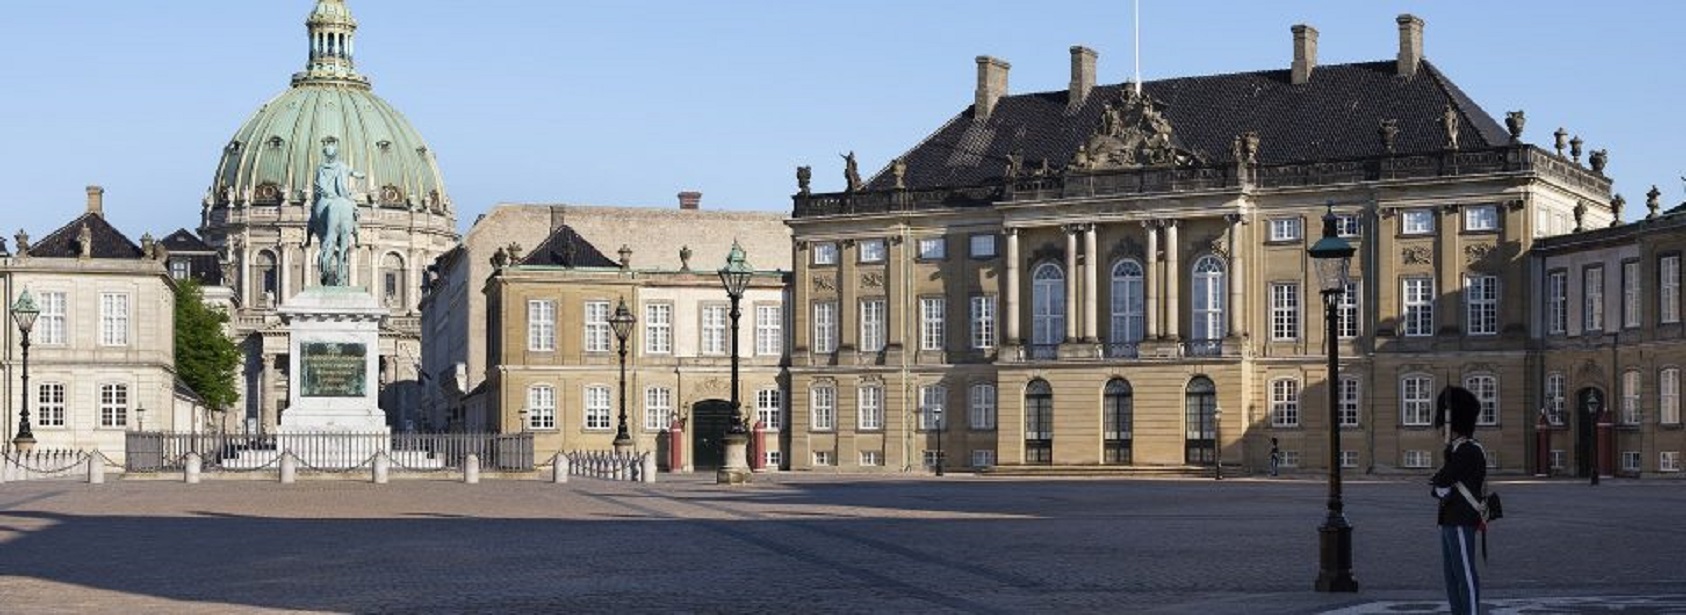 Amalienborg Slots Museum - guidet rundtur og frokost i restaurant Amalie